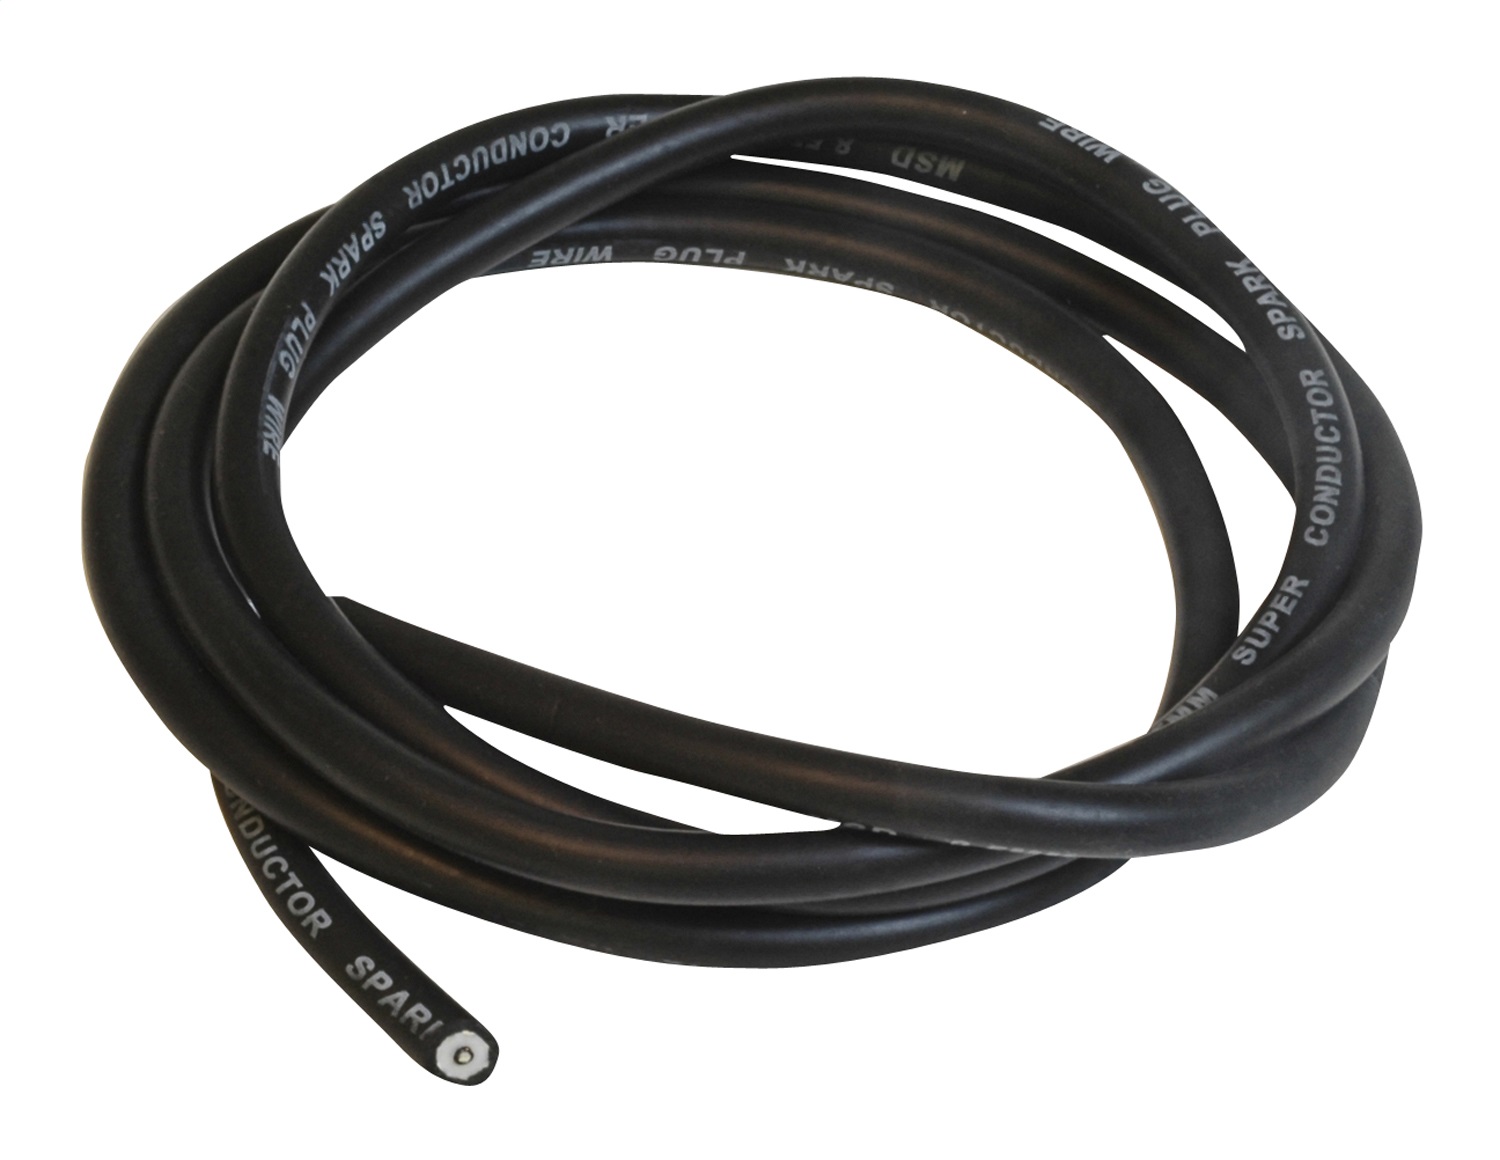 Super Conductor Bulk Wire - 25ft. Black - 34013